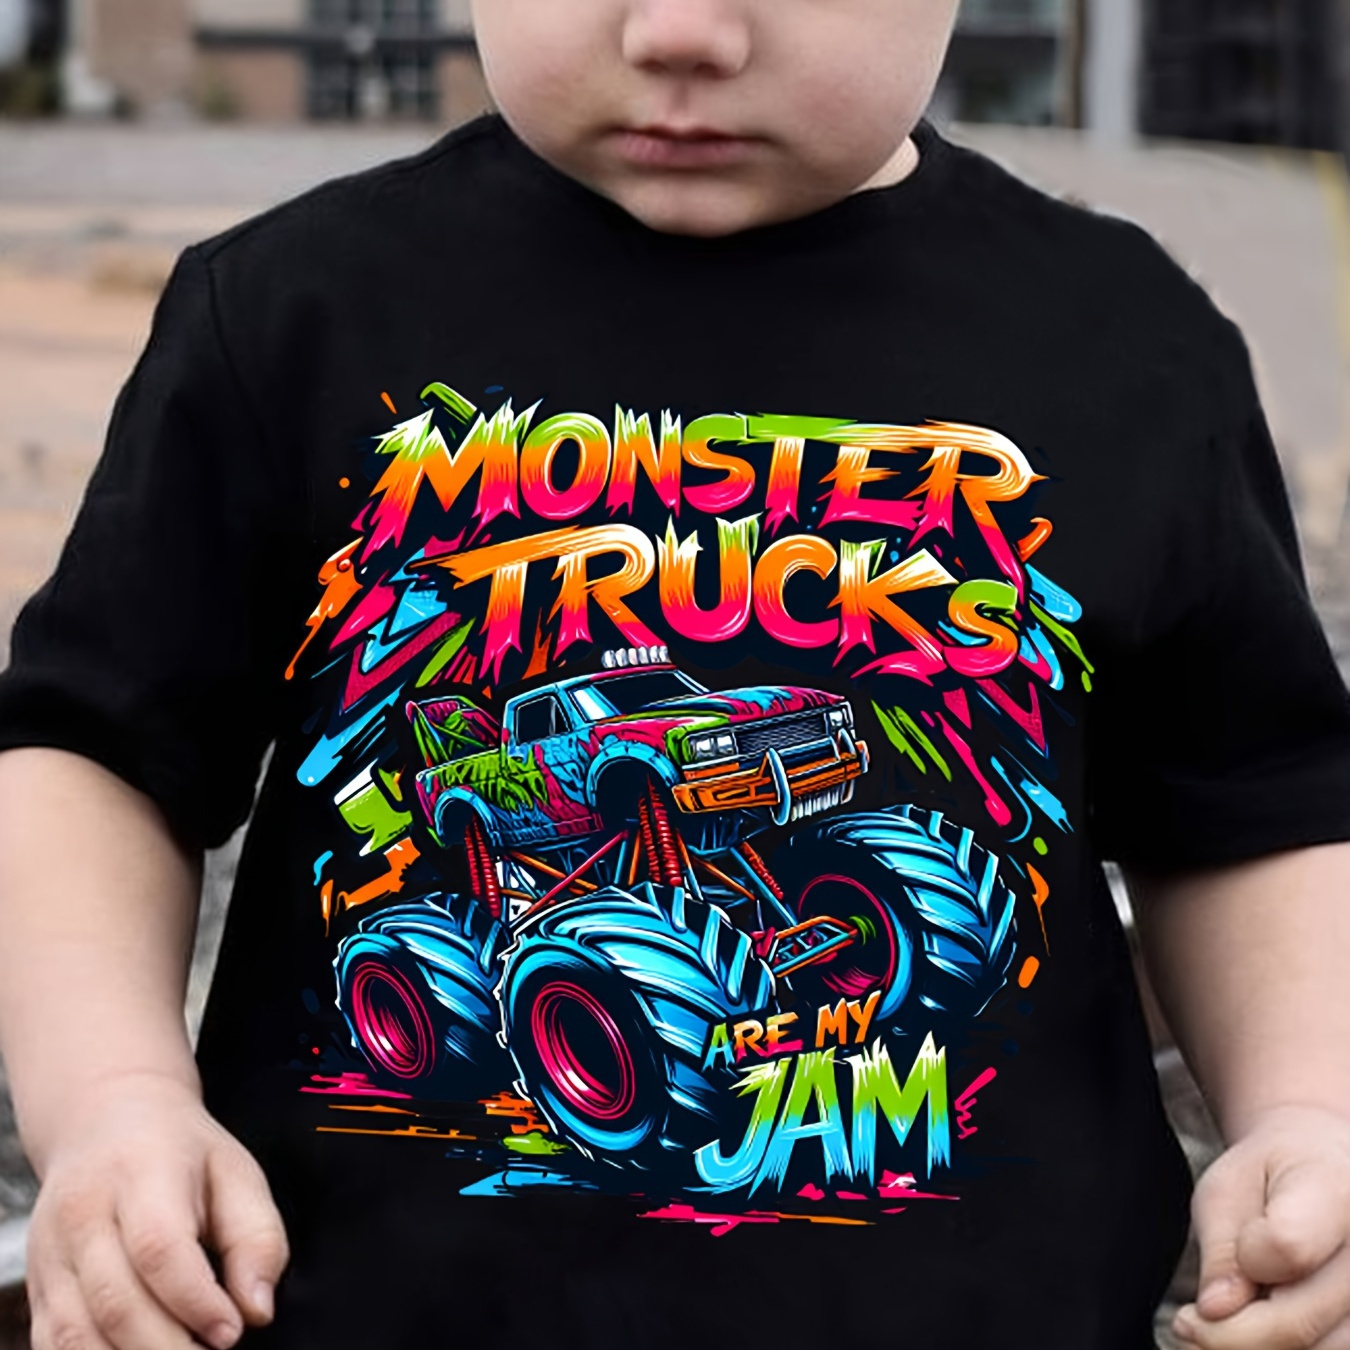 

Trendy Cute Boy's Summer Top - Monster Truck Jam Cartoon Print Short Sleeve Crew Neck T-shirt - Casual Outing Tee Gift